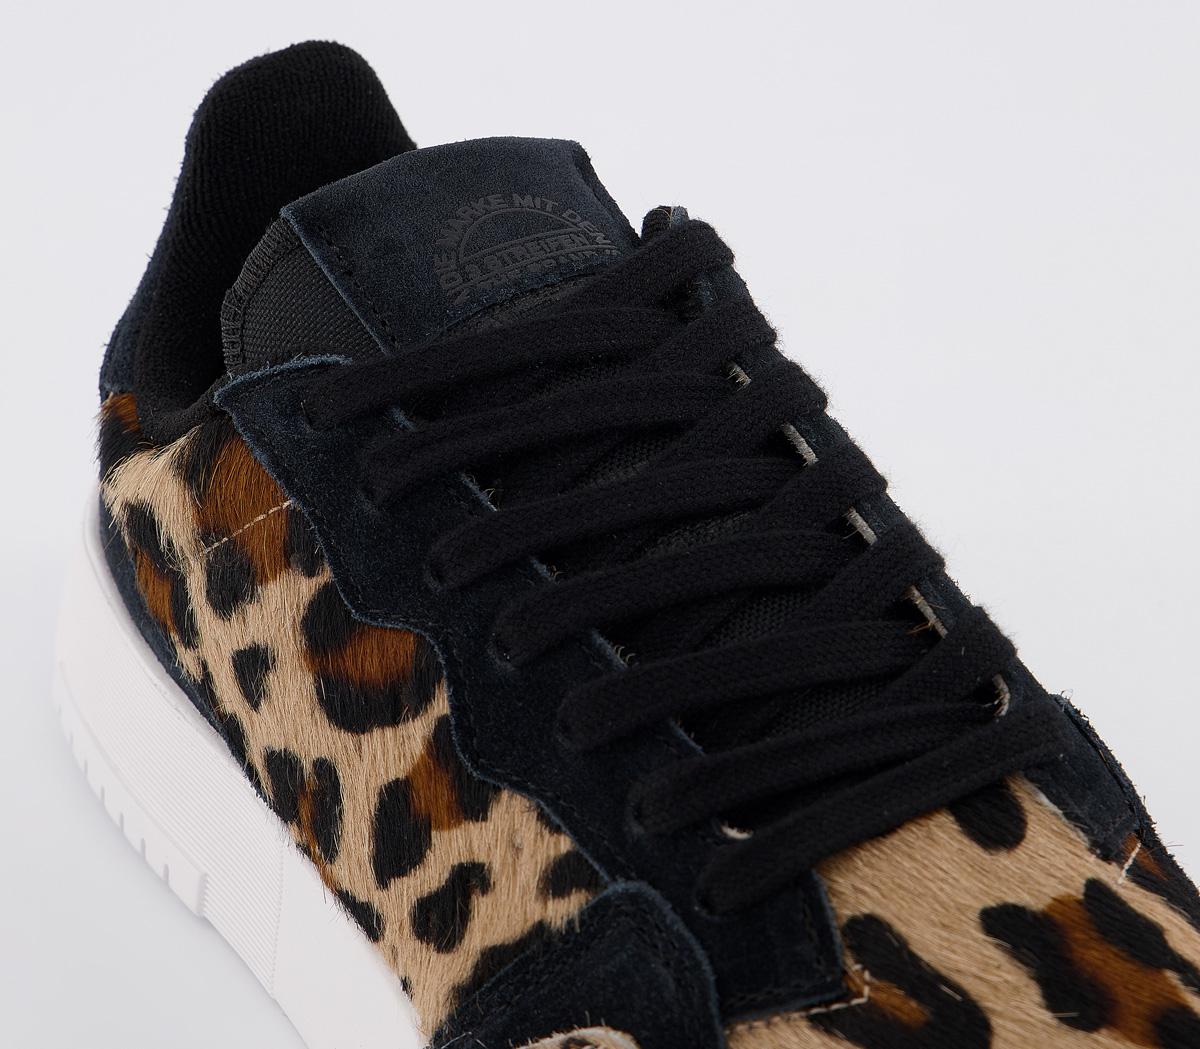 adidas supercourt leopard